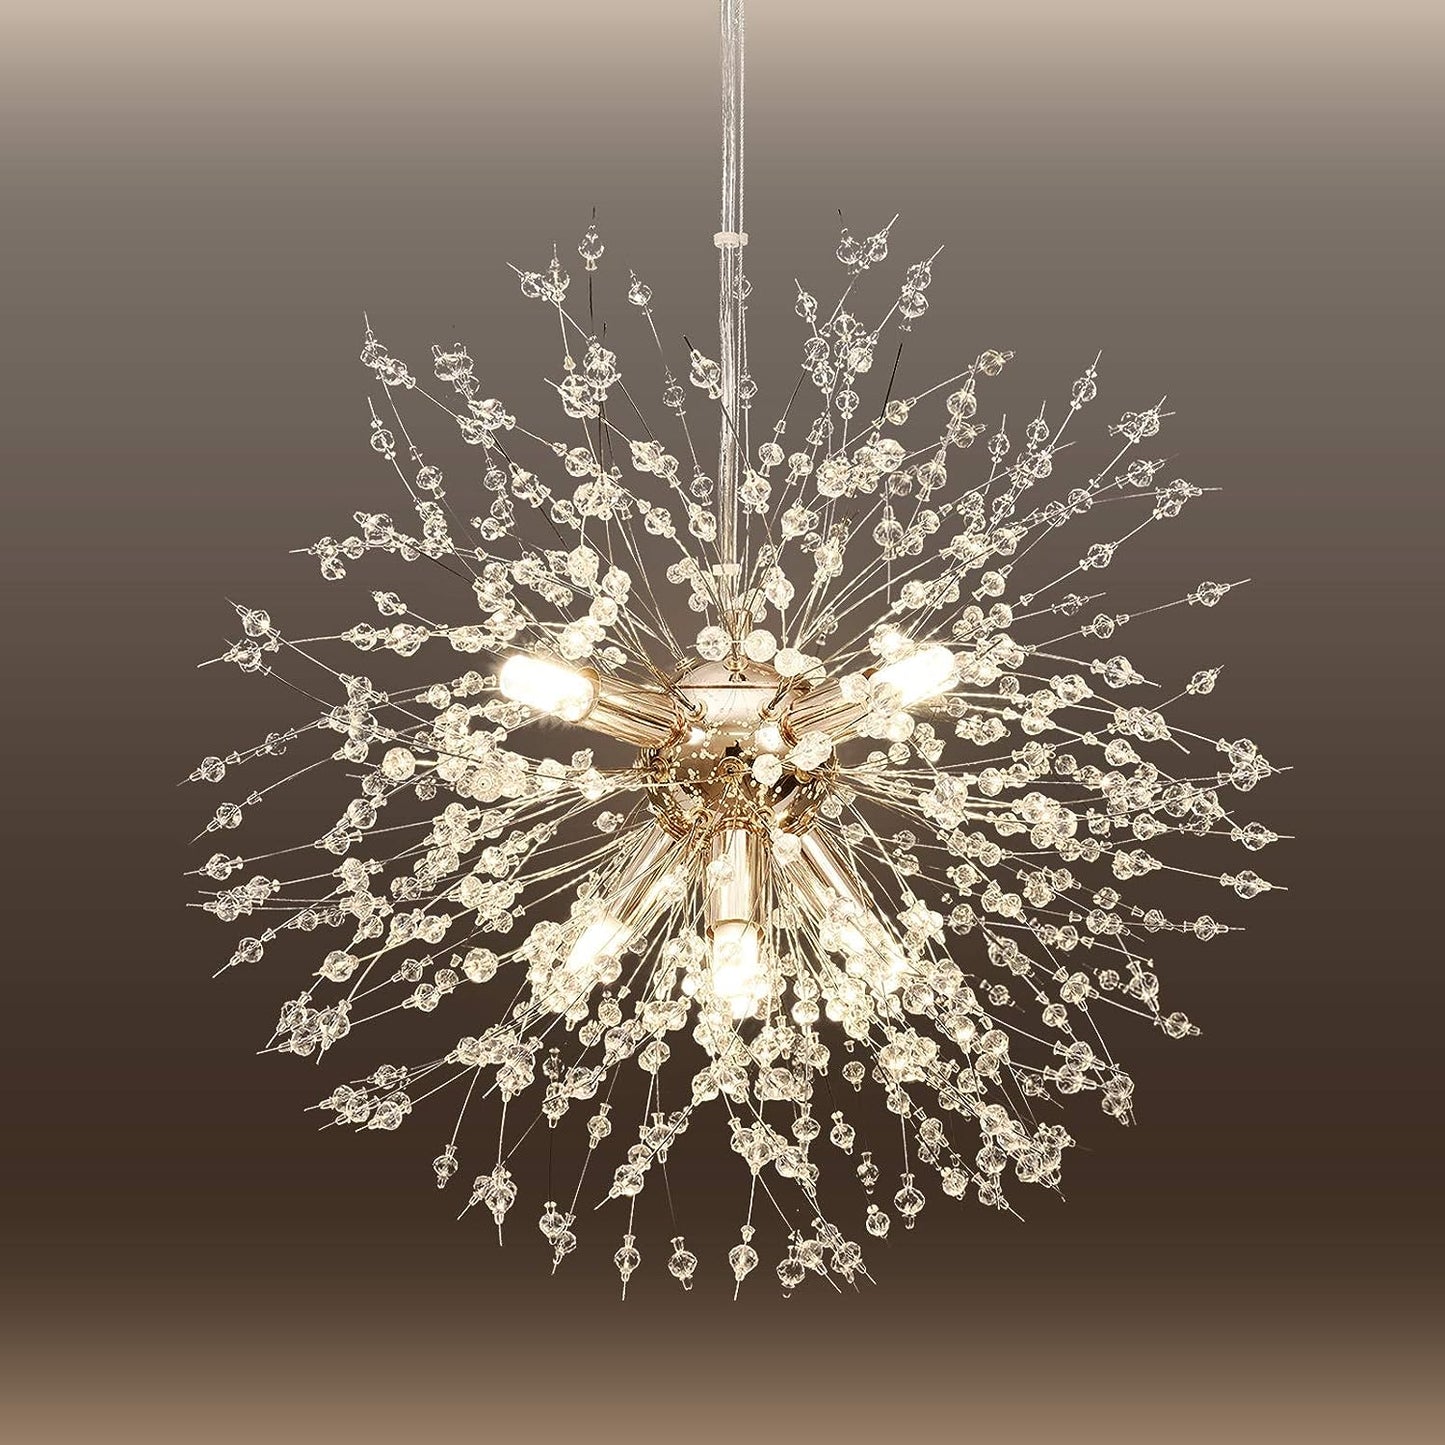 Chandelier Modern Crystal Pendant Lighting, Gold Dandelion Firework Chandelier 8-Light Ceiling Pendant Lamp for Dining Room, Bedroom, Kitchen, Living Room (Dia 15.8 Inch)